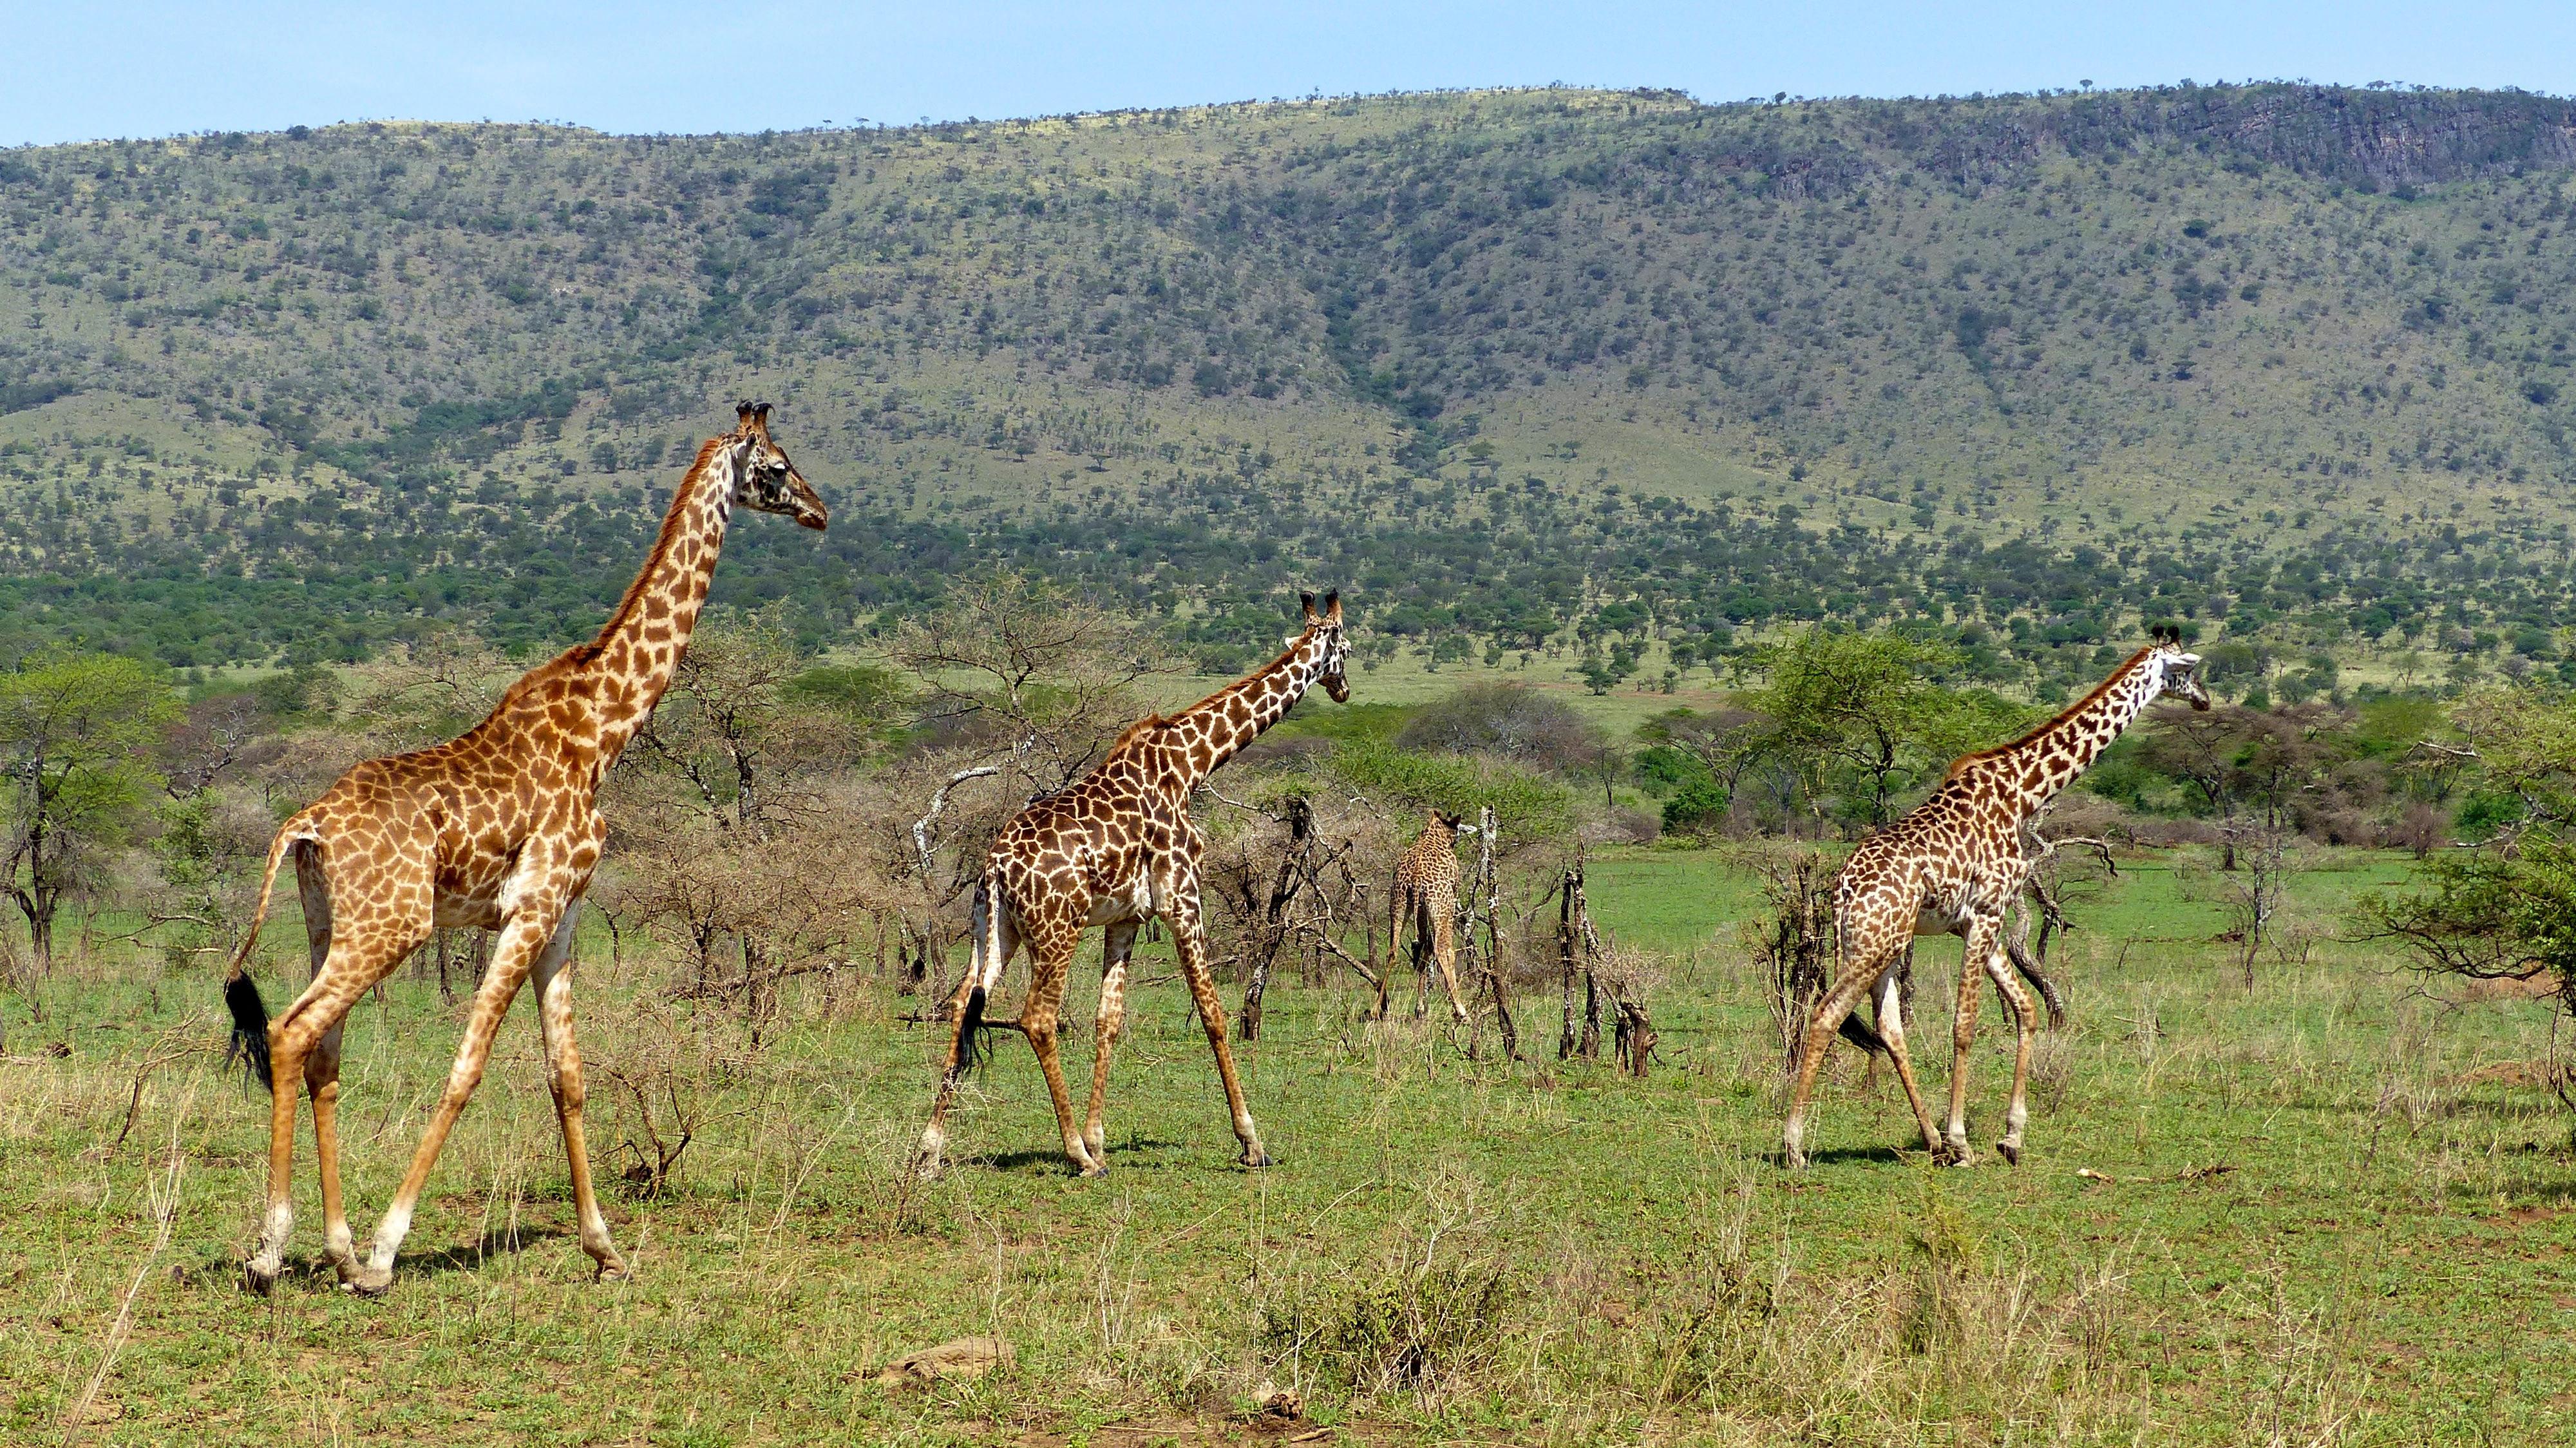 Giraffes walk across the Serengeti. Courtesy of Patrick Carroll.